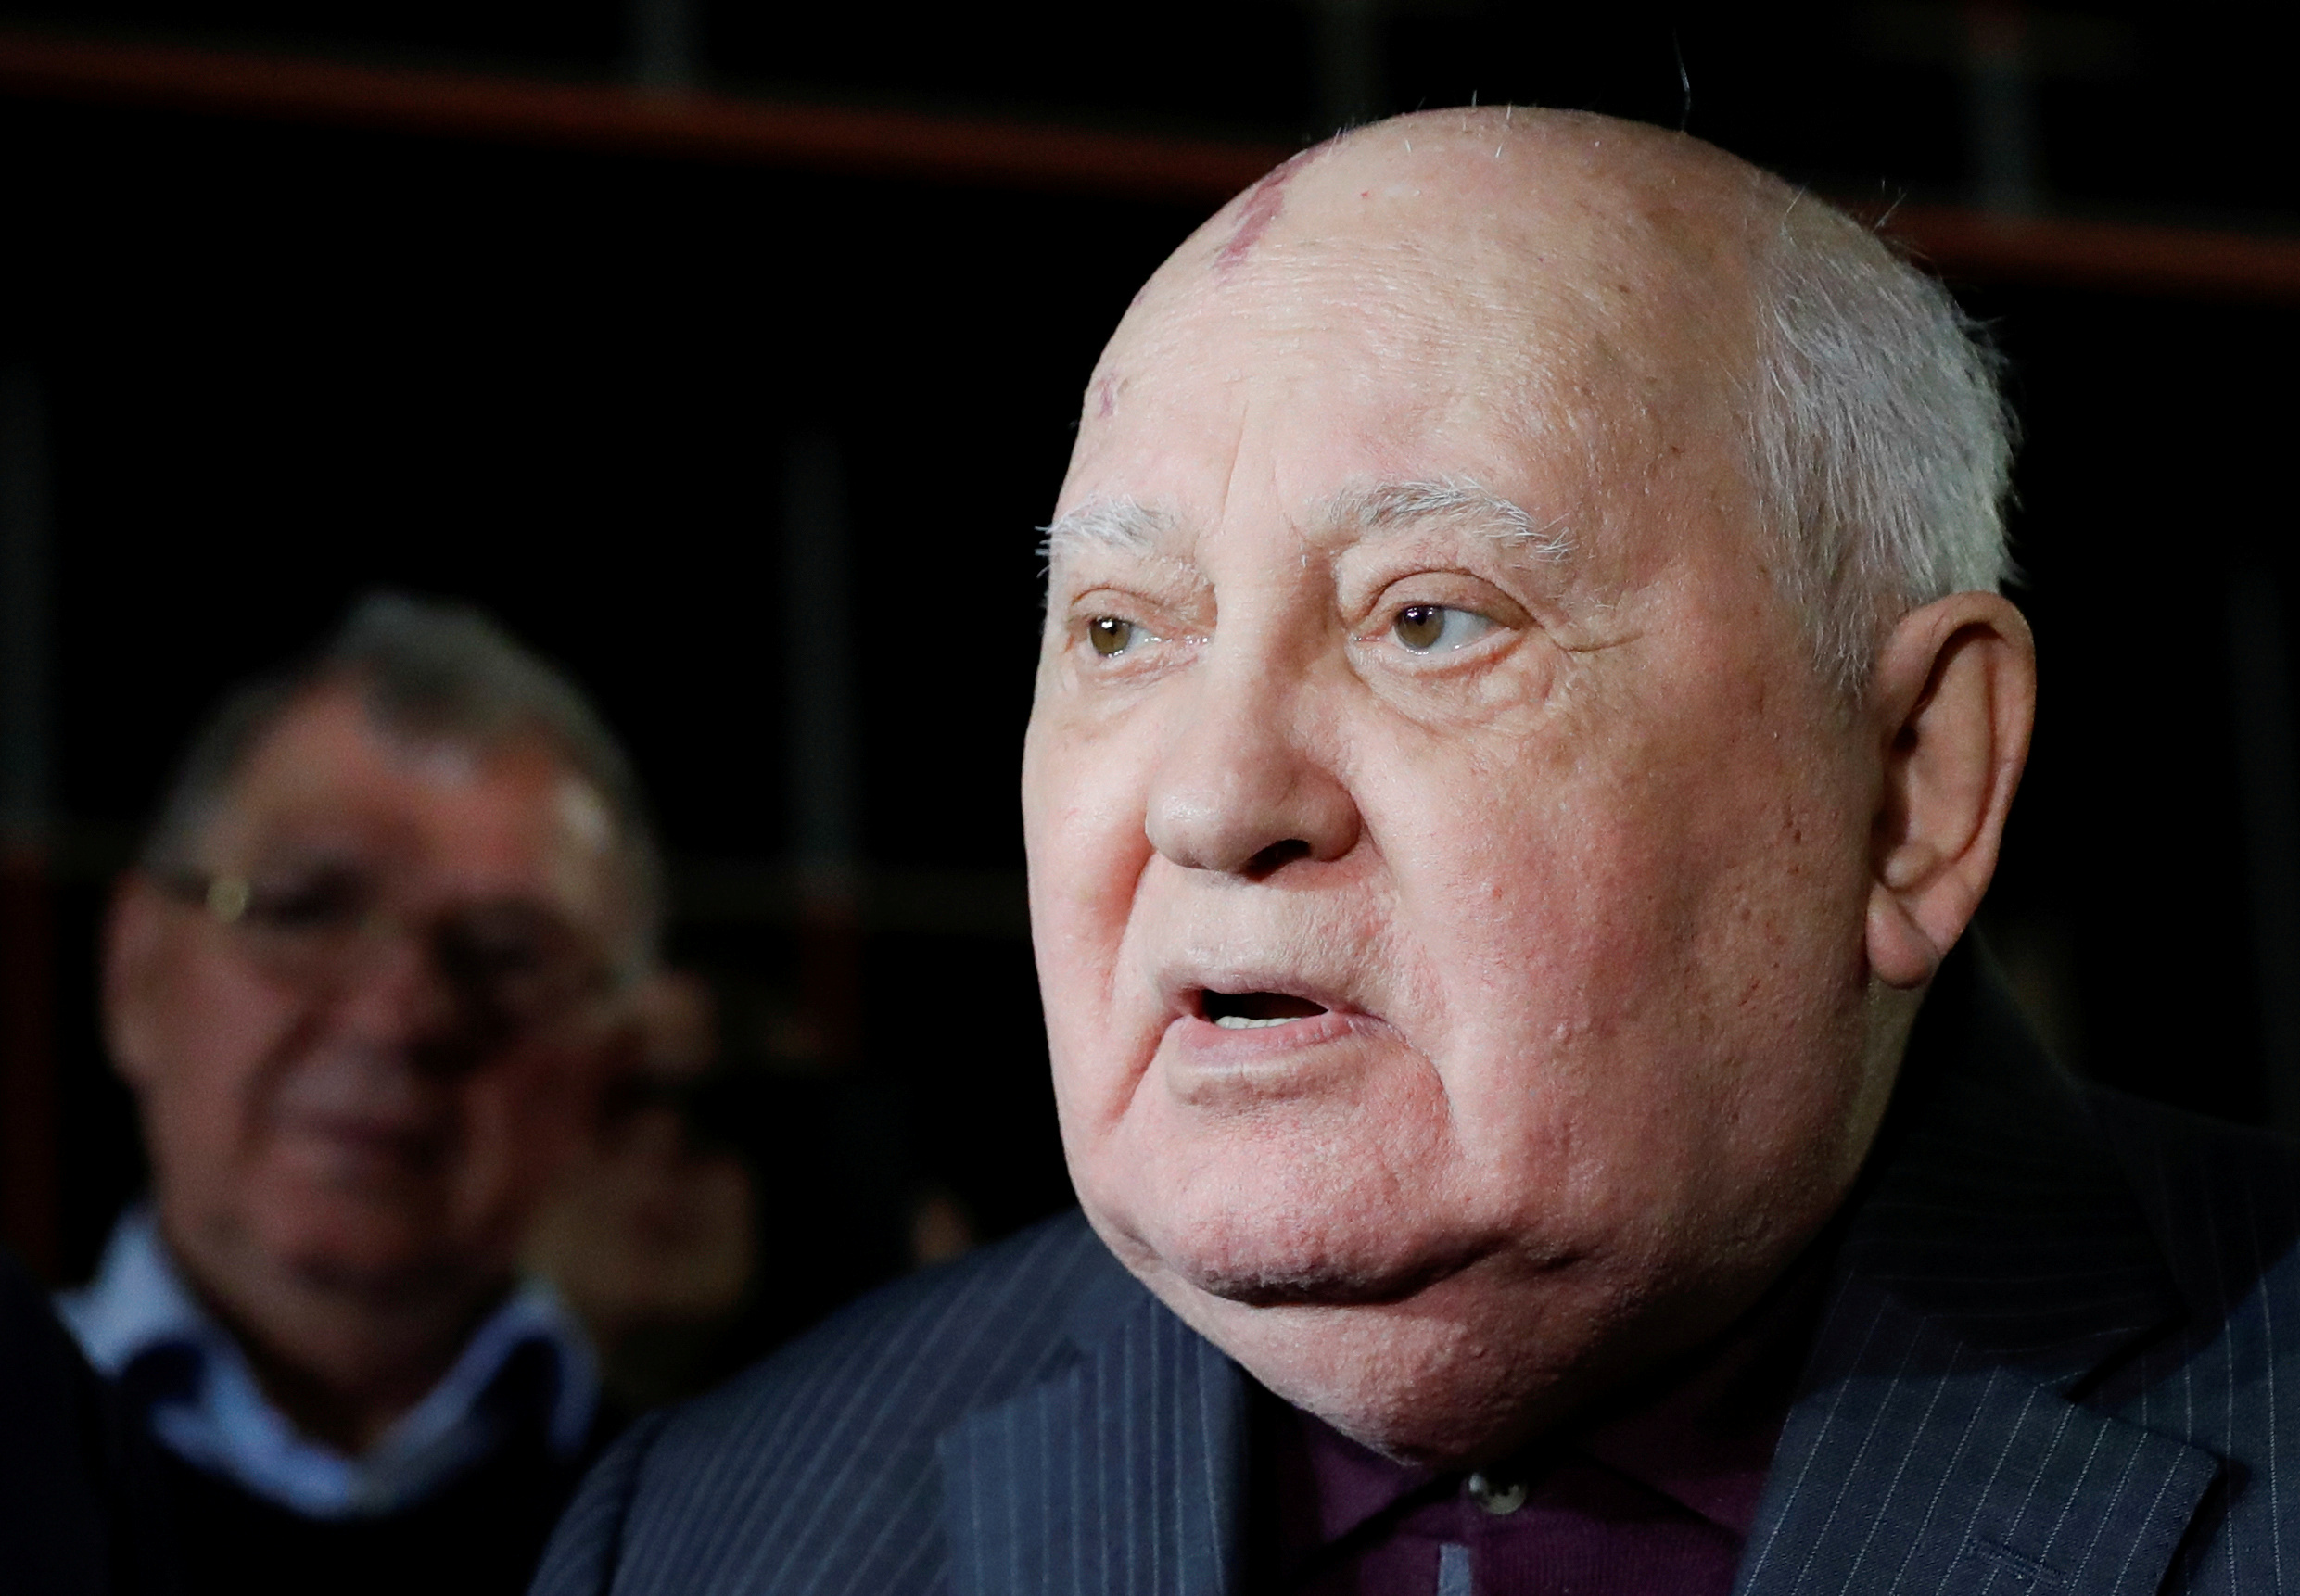 Former Soviet President Gorbachev attends the premiere of the documentary film "Meeting Gorbachev" in Moscow